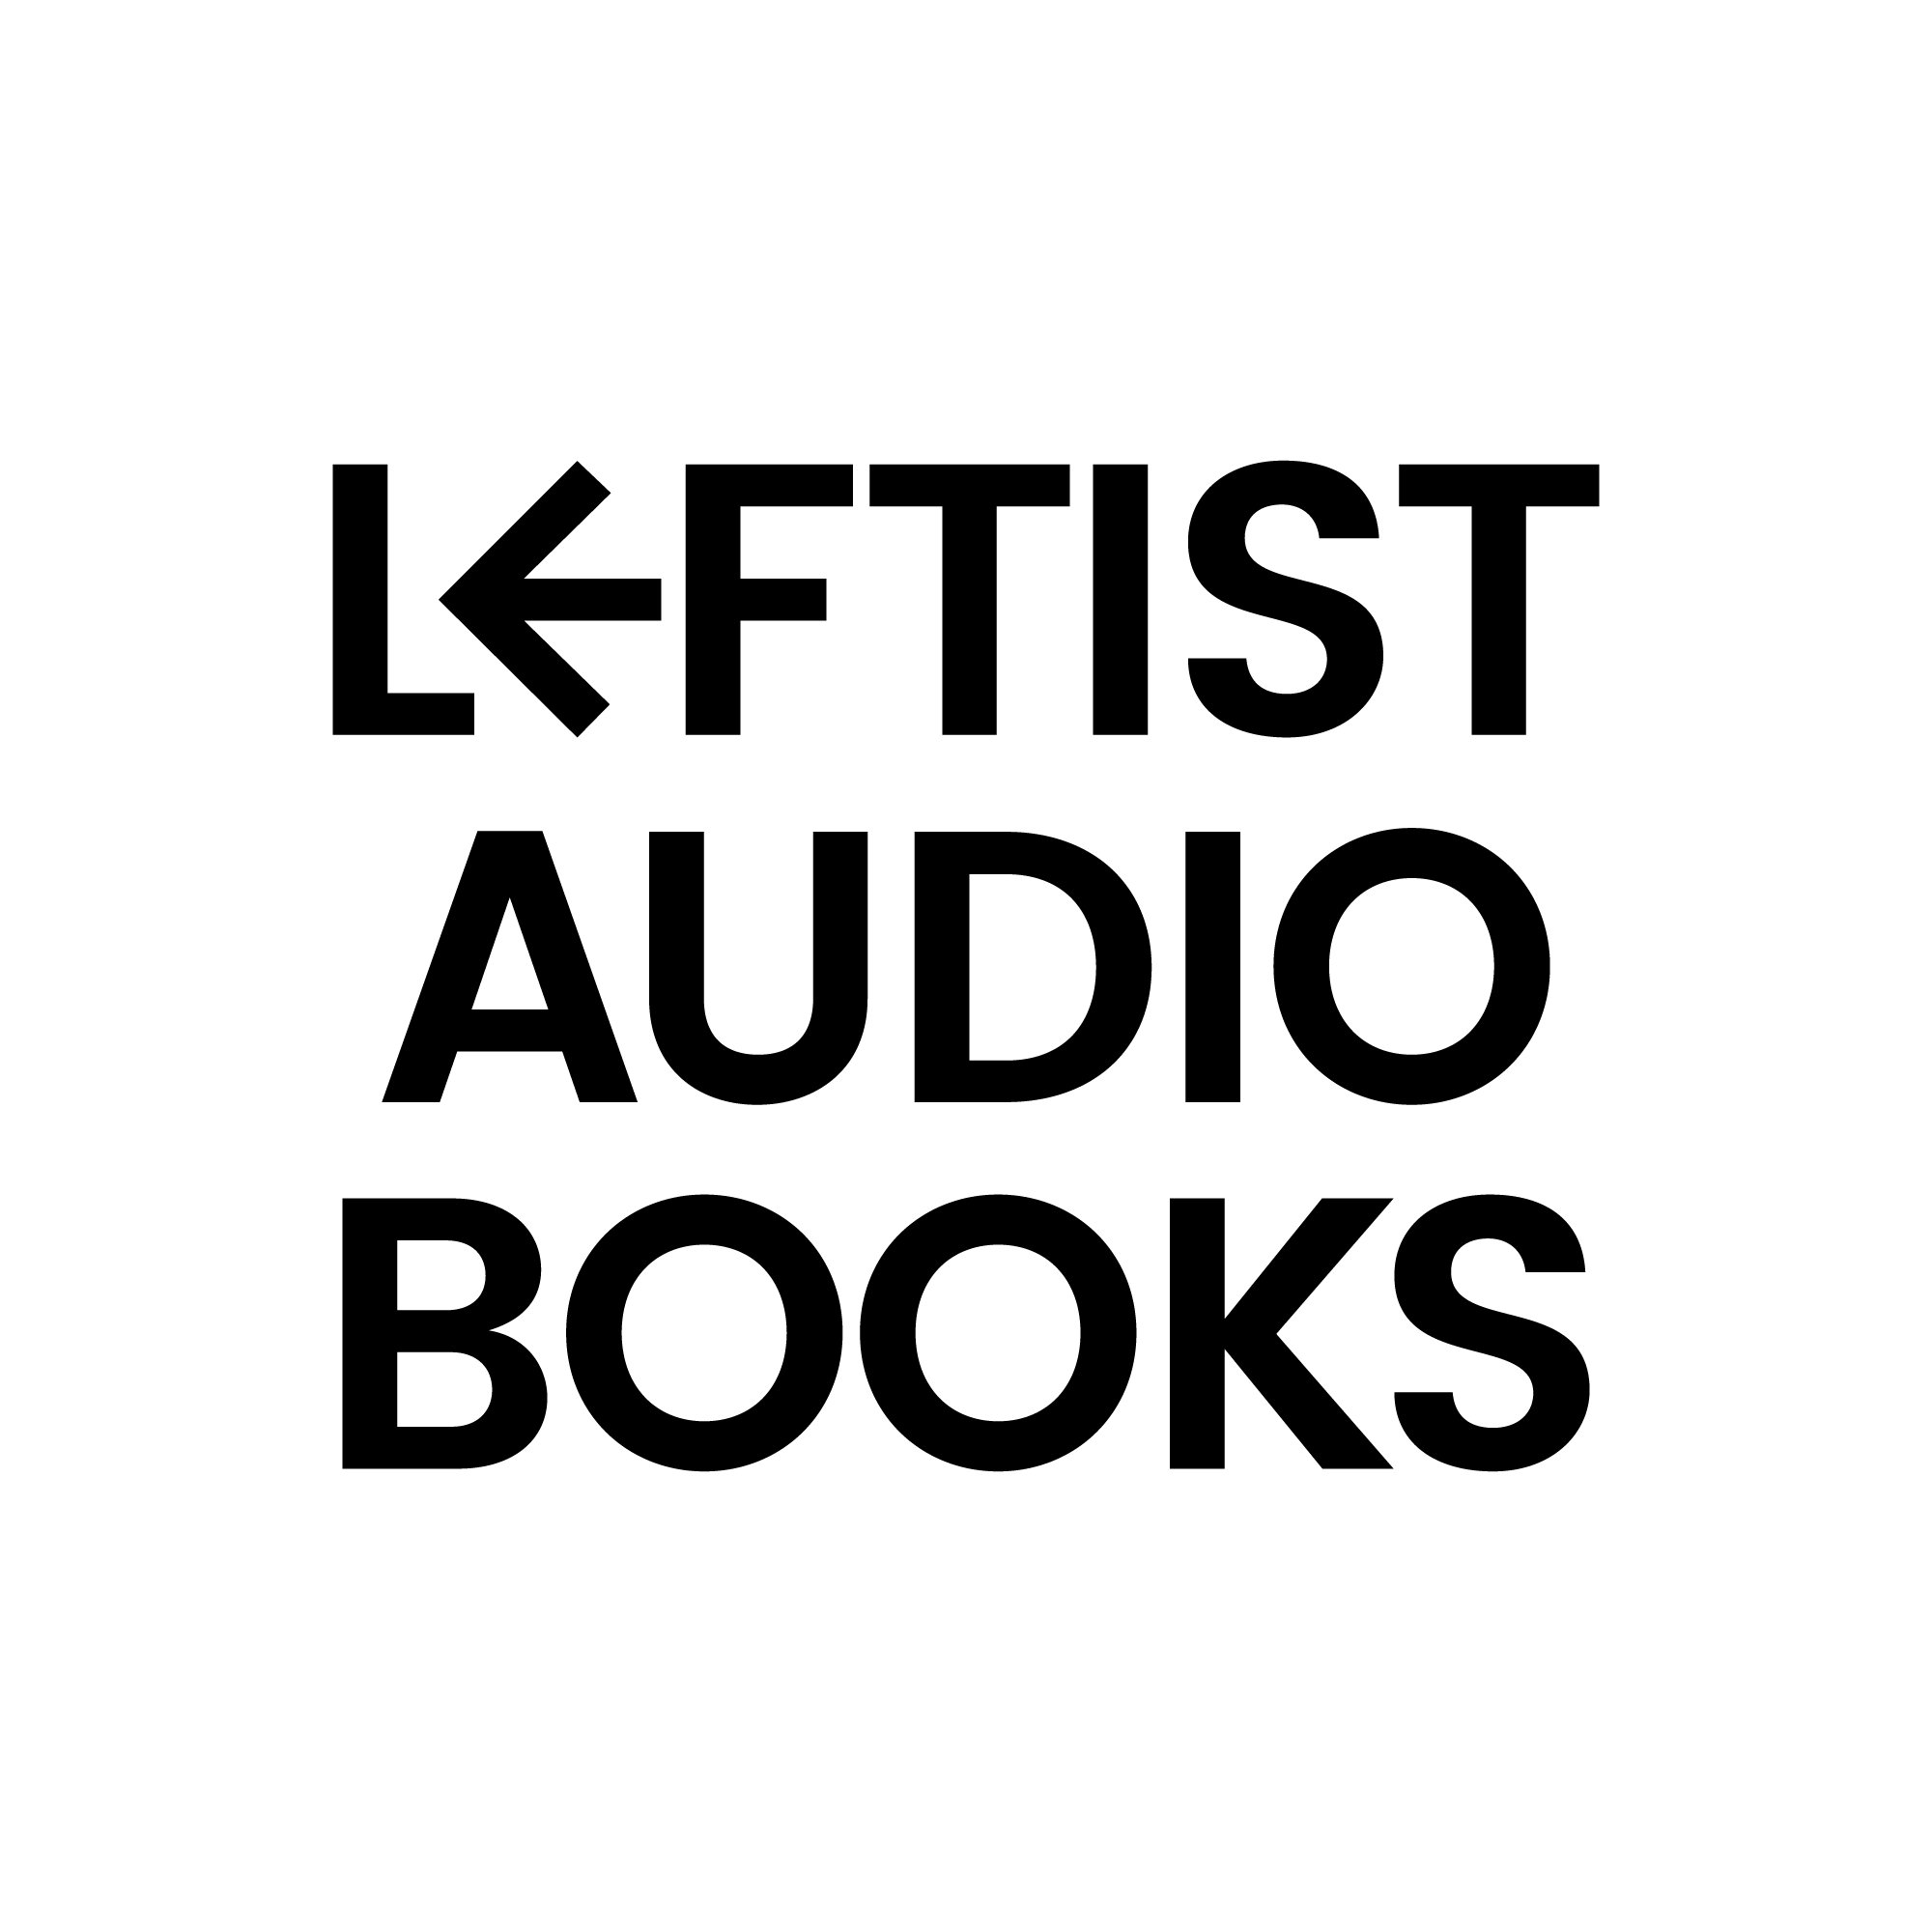 Revolutionary and progressive audiobooks.